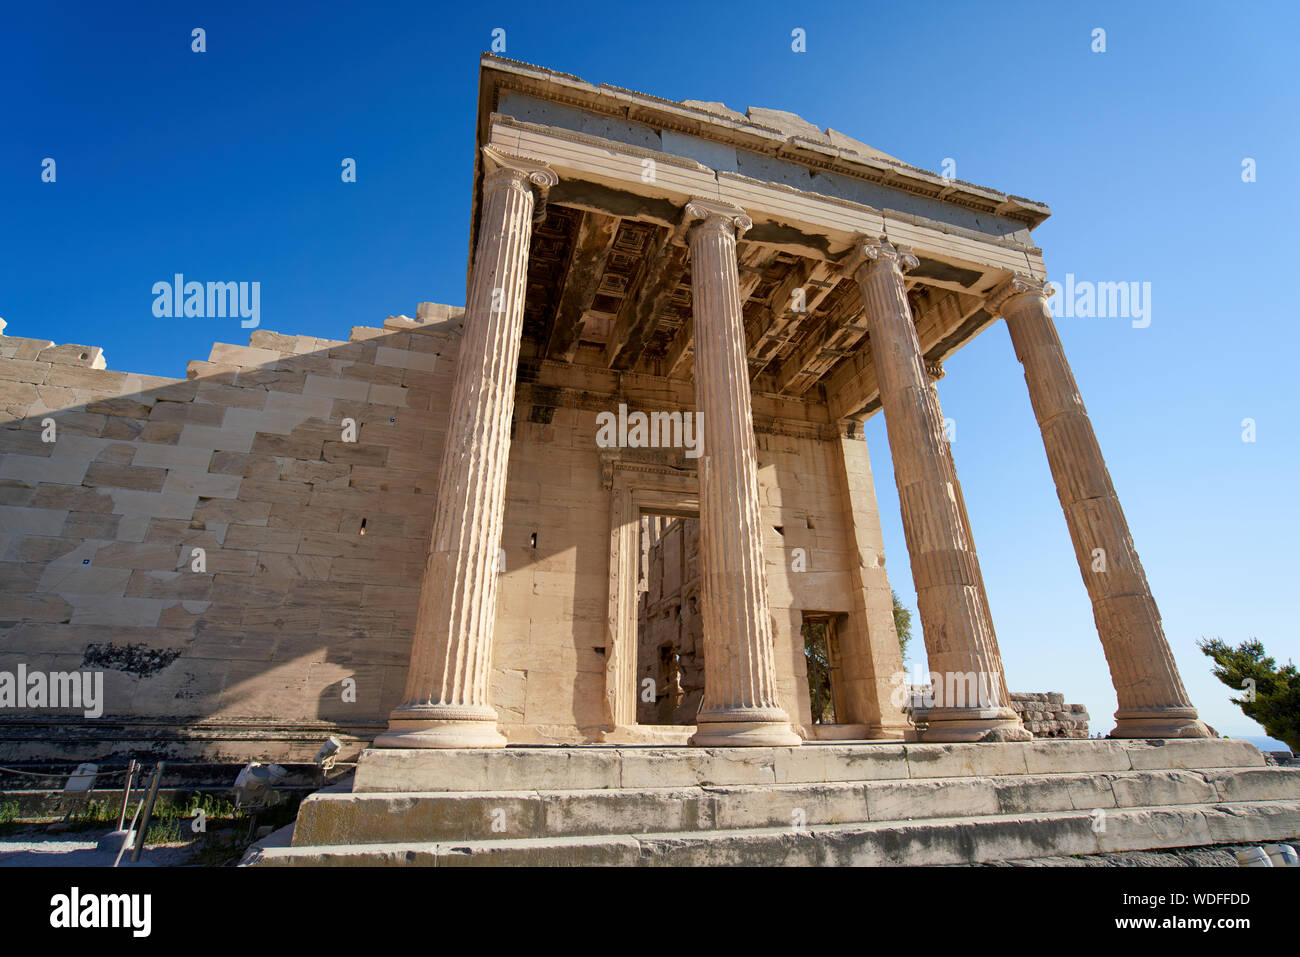 The Erechtheion on the ancient Acropolis in Athens, Greece Stock Photo